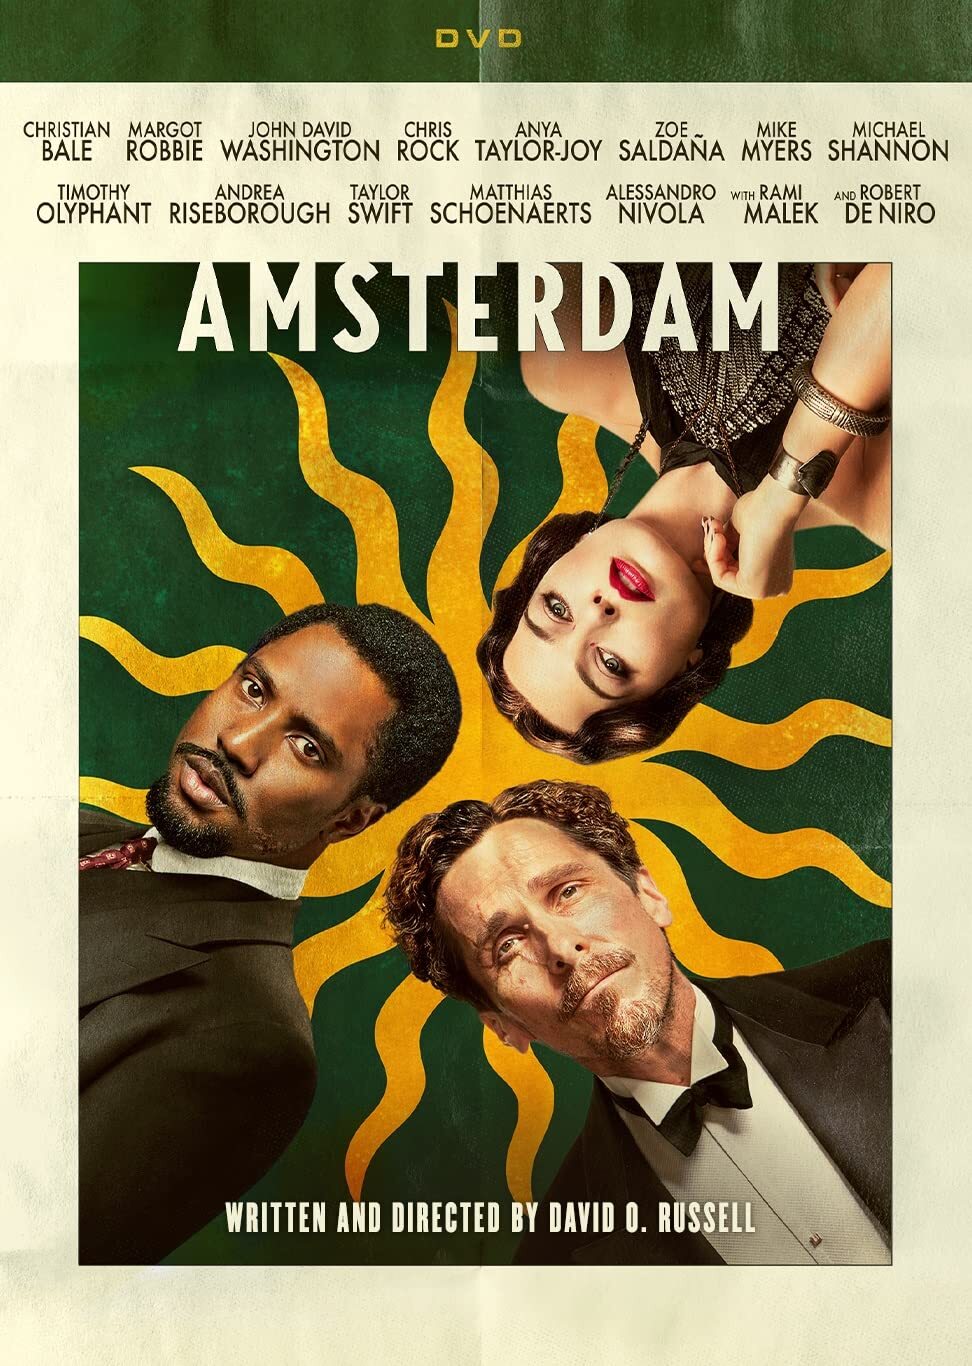 ‘Amsterdam’ Digital Release on November 11th